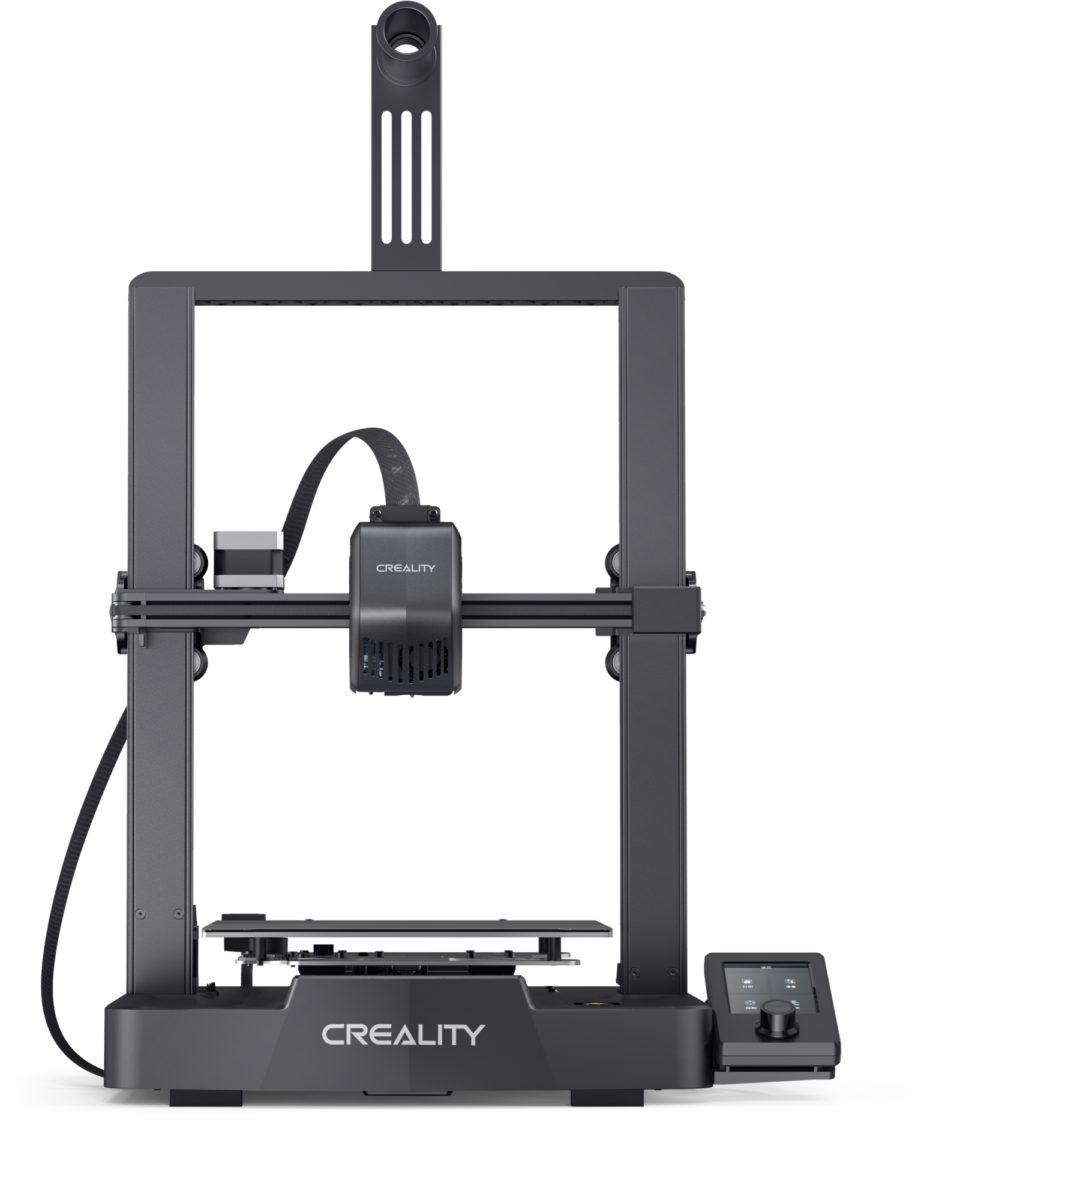 CREALITY Ender-3 V3 SE 3D Printer - Auto leveling, Auto Z offset, speed 250mm/s - CREALITY 2.35.71.00.020